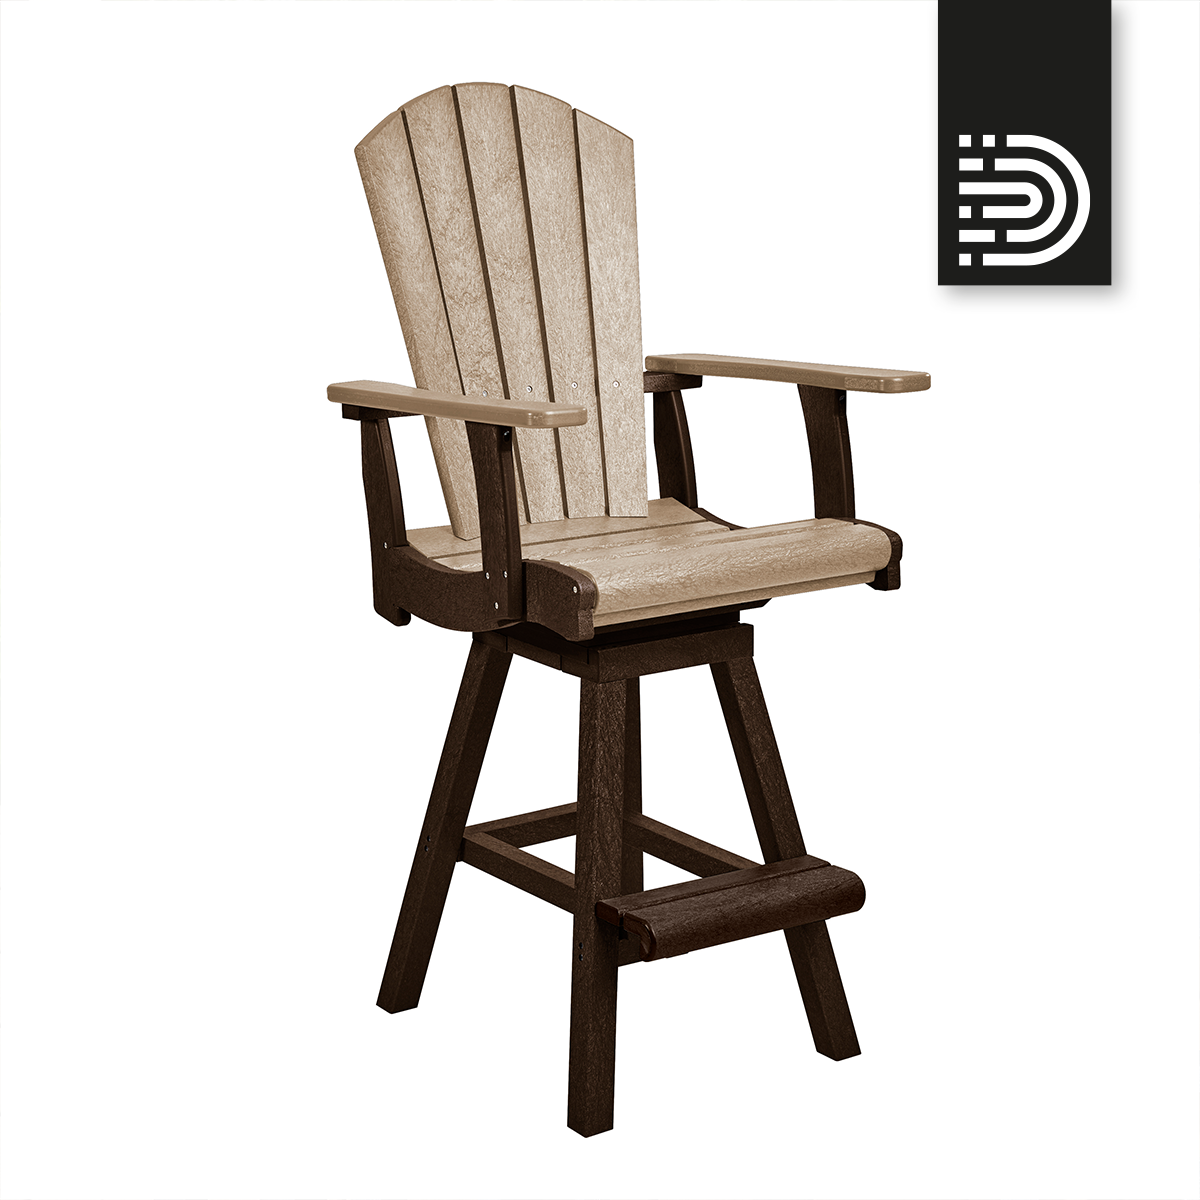 C25 Swivel Pub Arm Chair - choco 16/beige 07